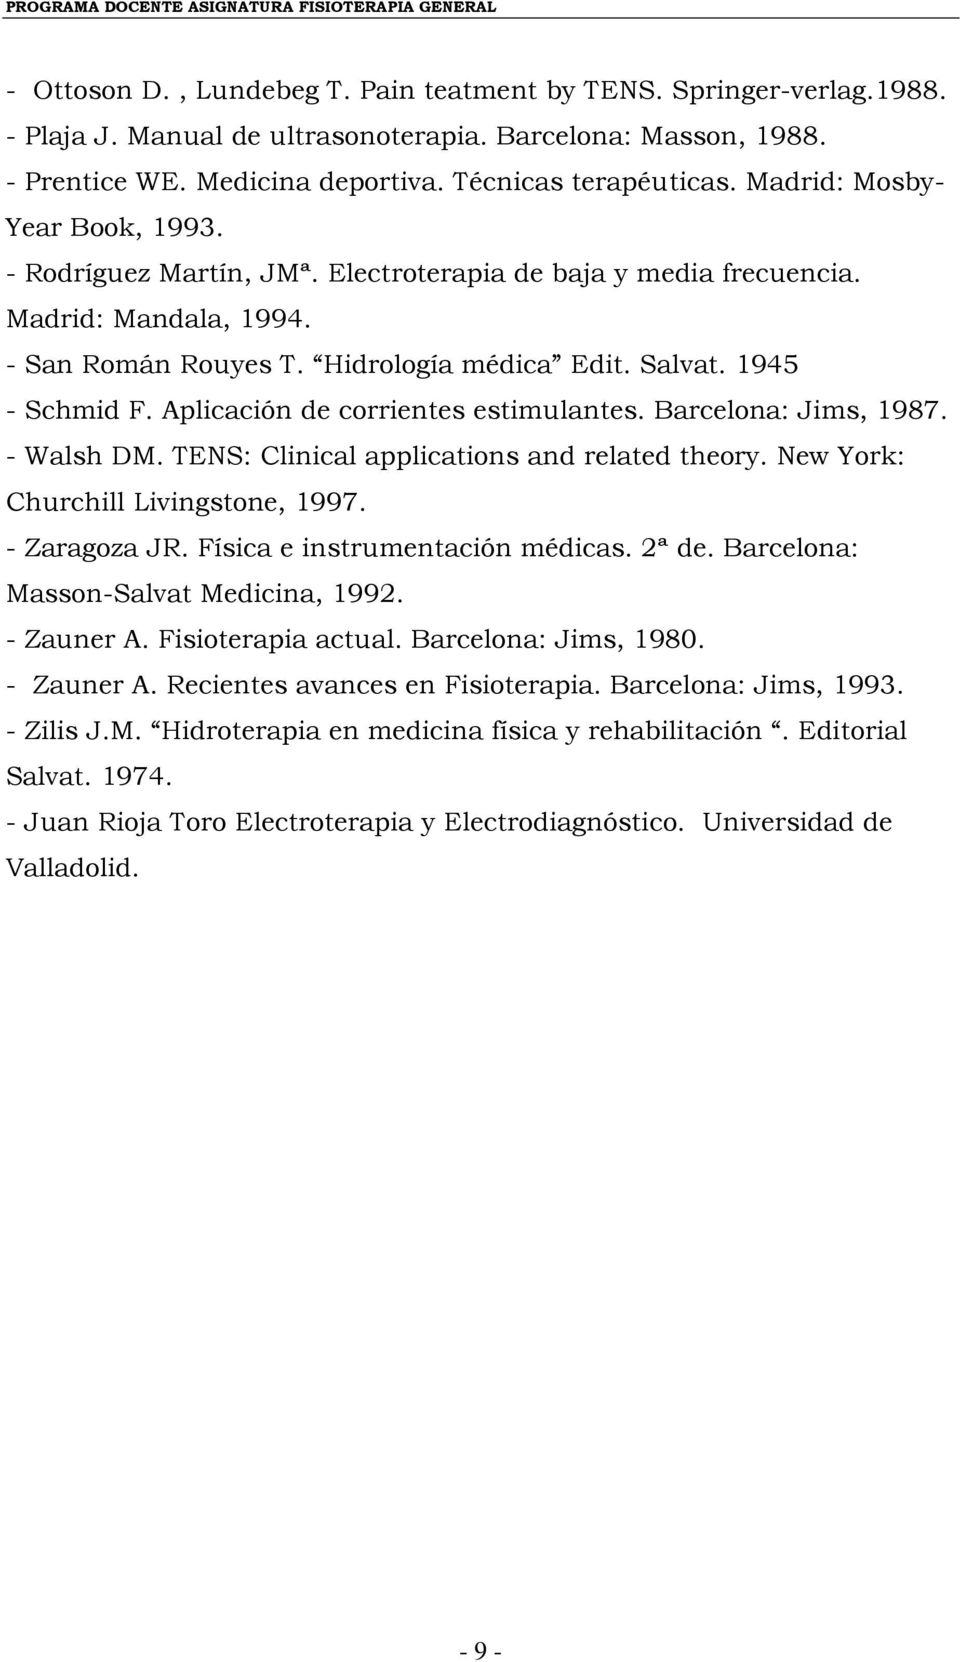 Aplicación de corrientes estimulantes. Barcelona: Jims, 1987. - Walsh DM. TENS: Clinical applications and related theory. New York: Churchill Livingstone, 1997. - Zaragoza JR.